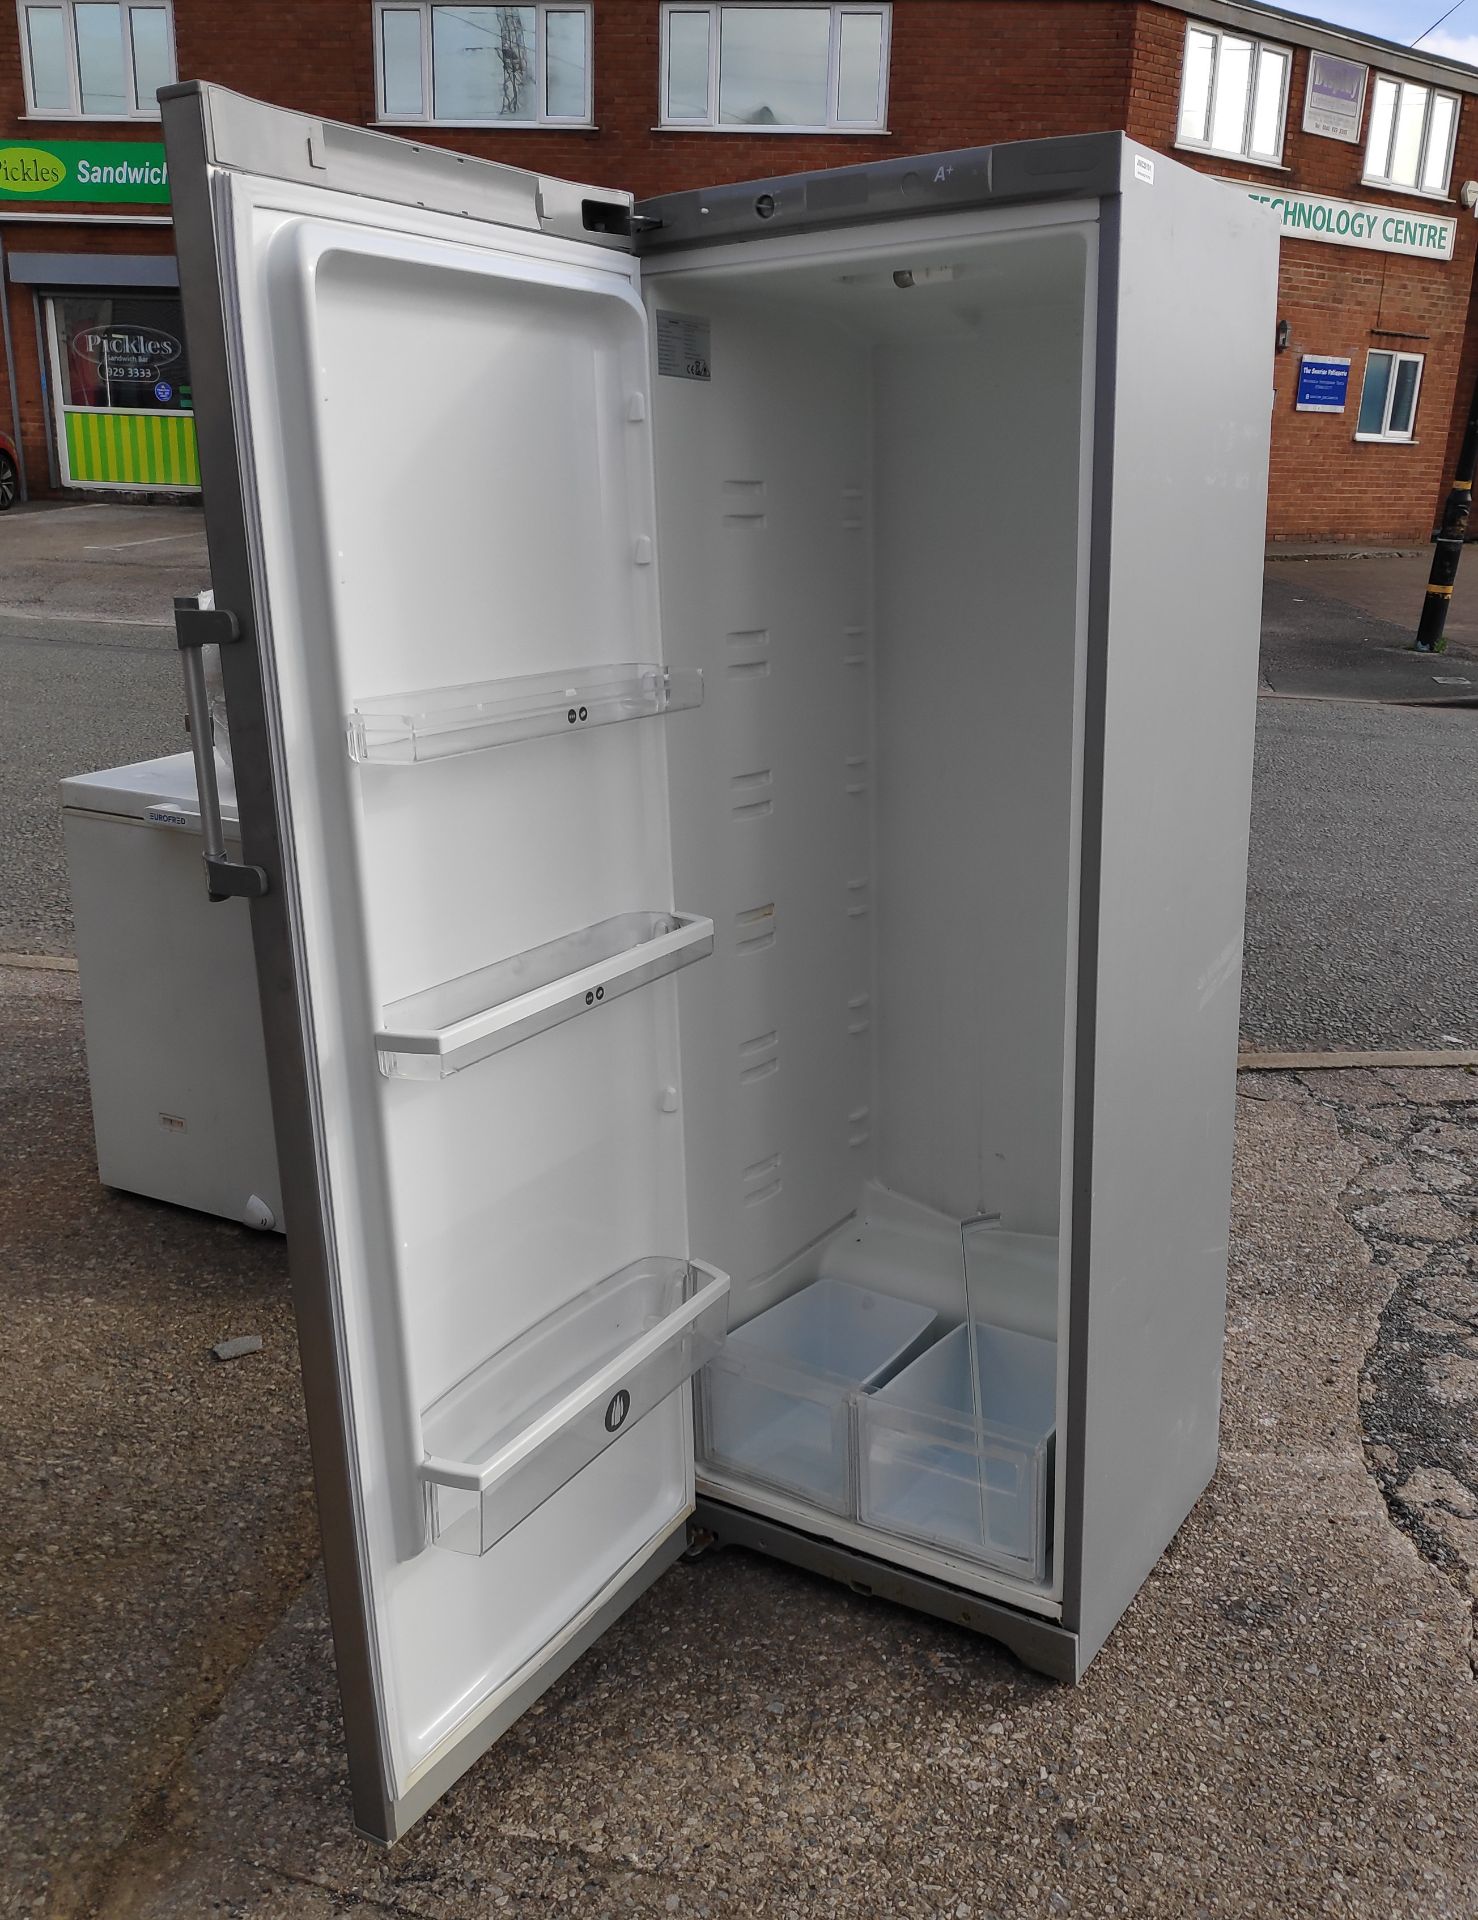 1 x Eurofred 340l Upright Refrigerator - Model MC350A+S - JMCS101 - CL723 - Location: Altrincham - Image 10 of 11